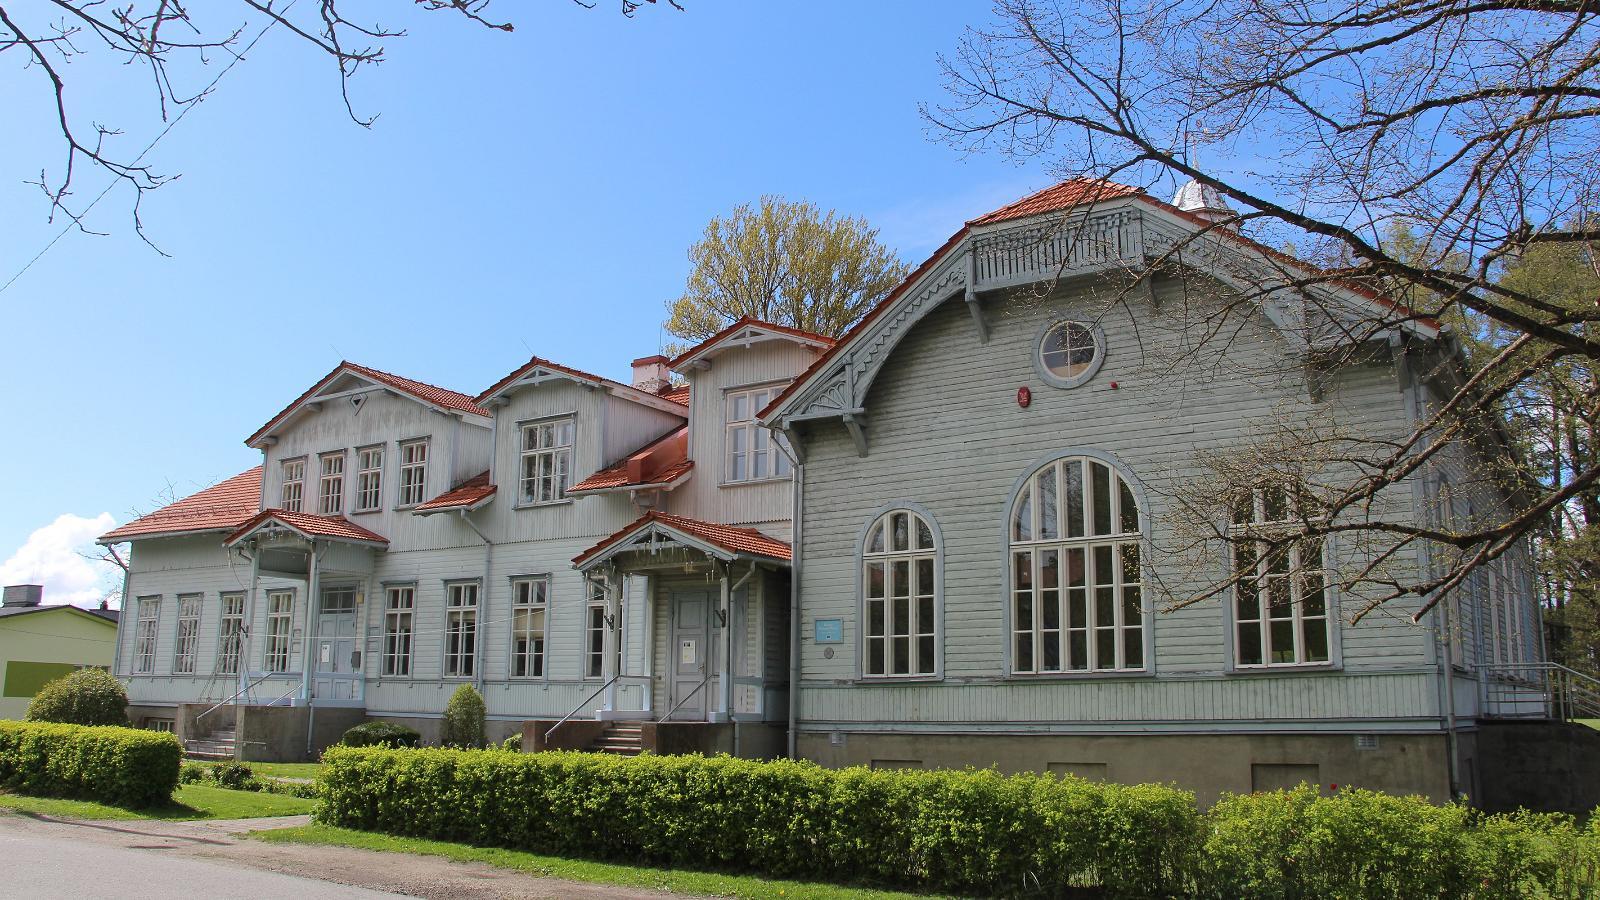 Raeküla Old School Centre